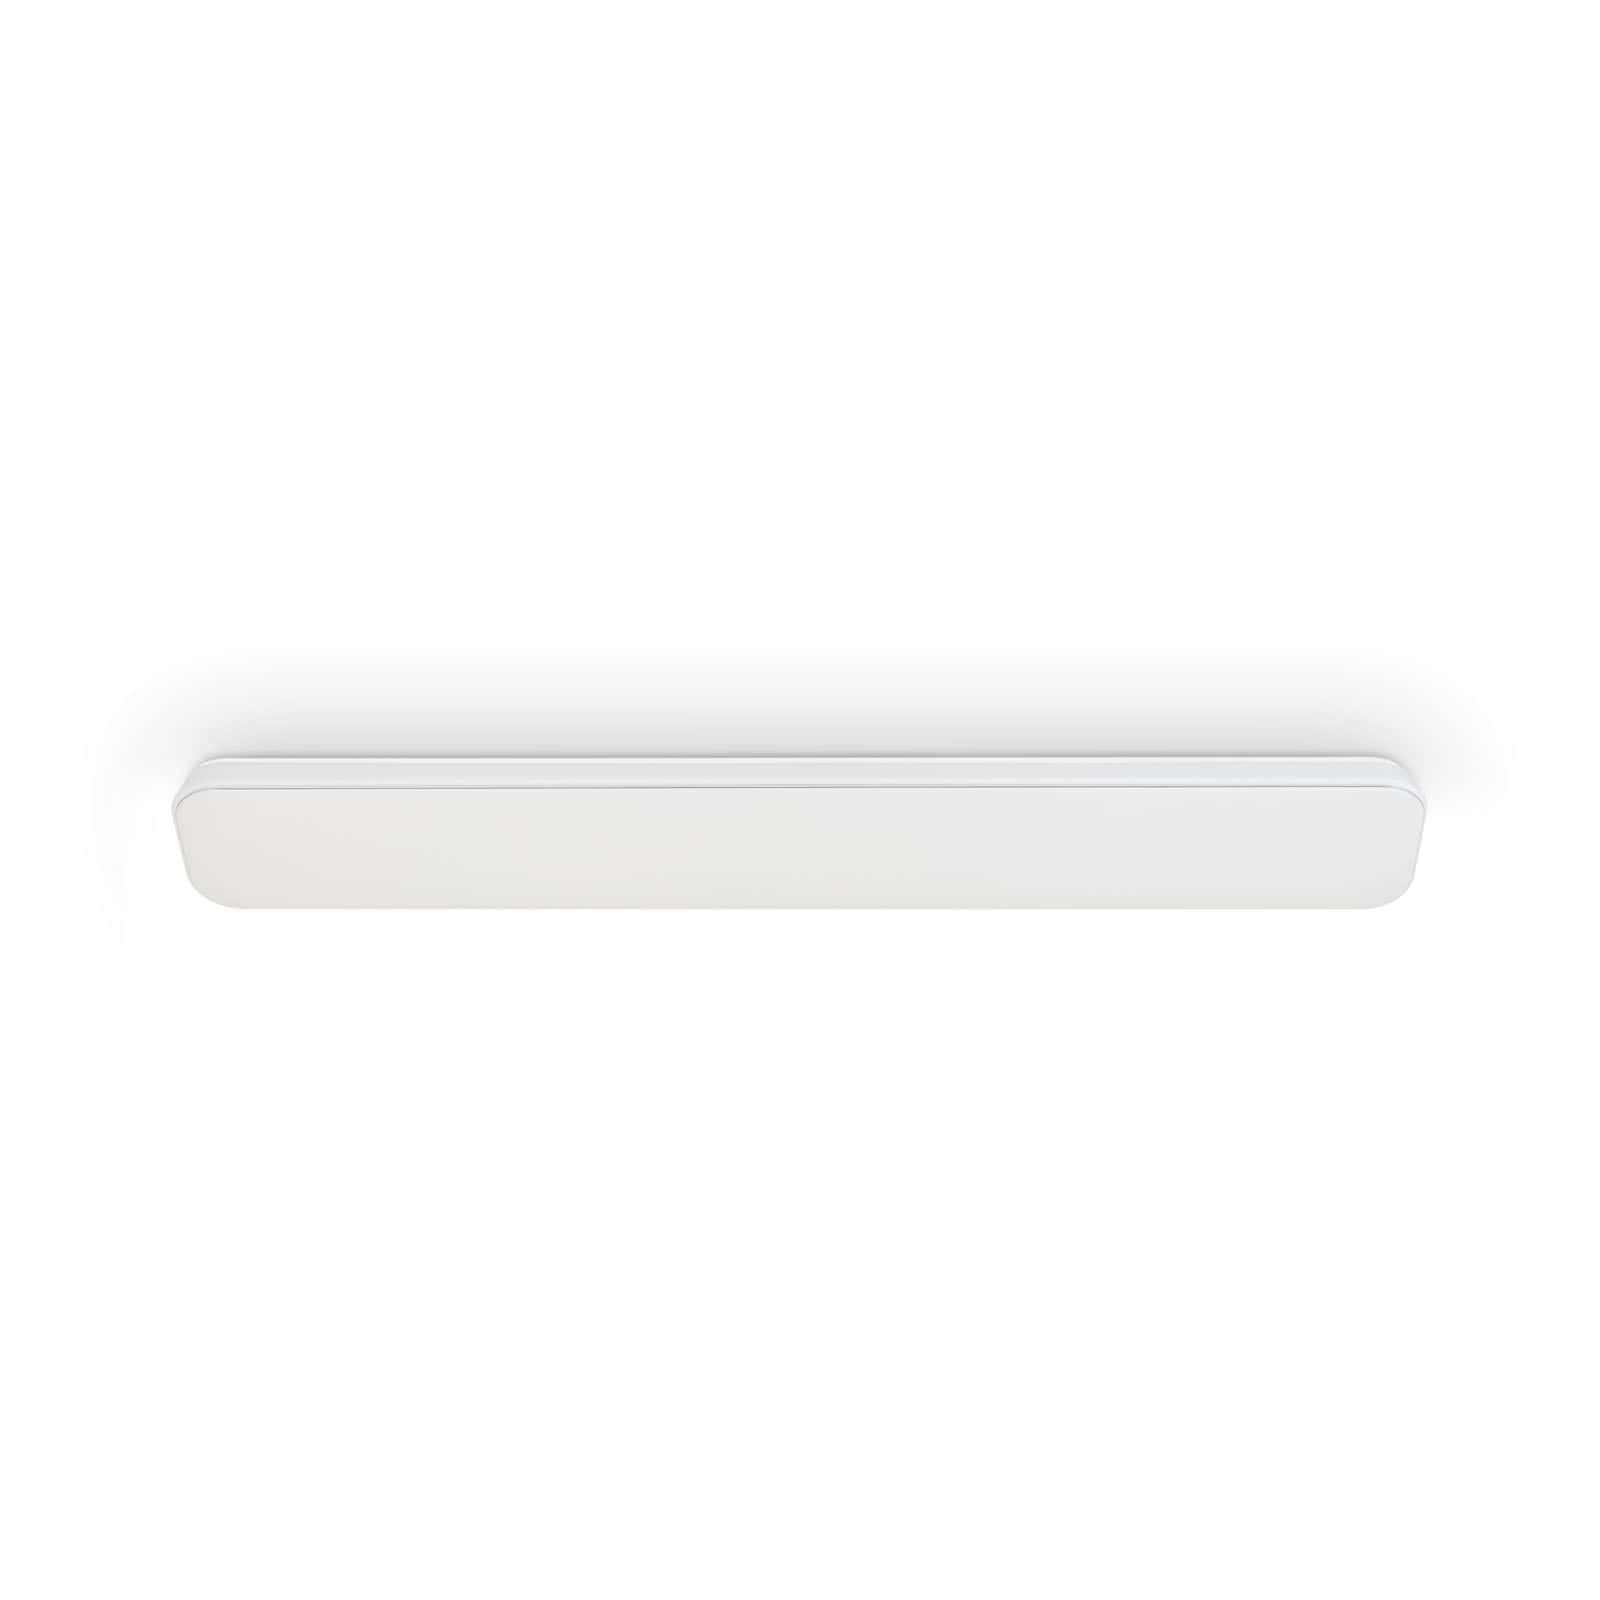 TELEFUNKEN LED Luce a soffitto 115,5 cm 1x 48W 5100lm bianco